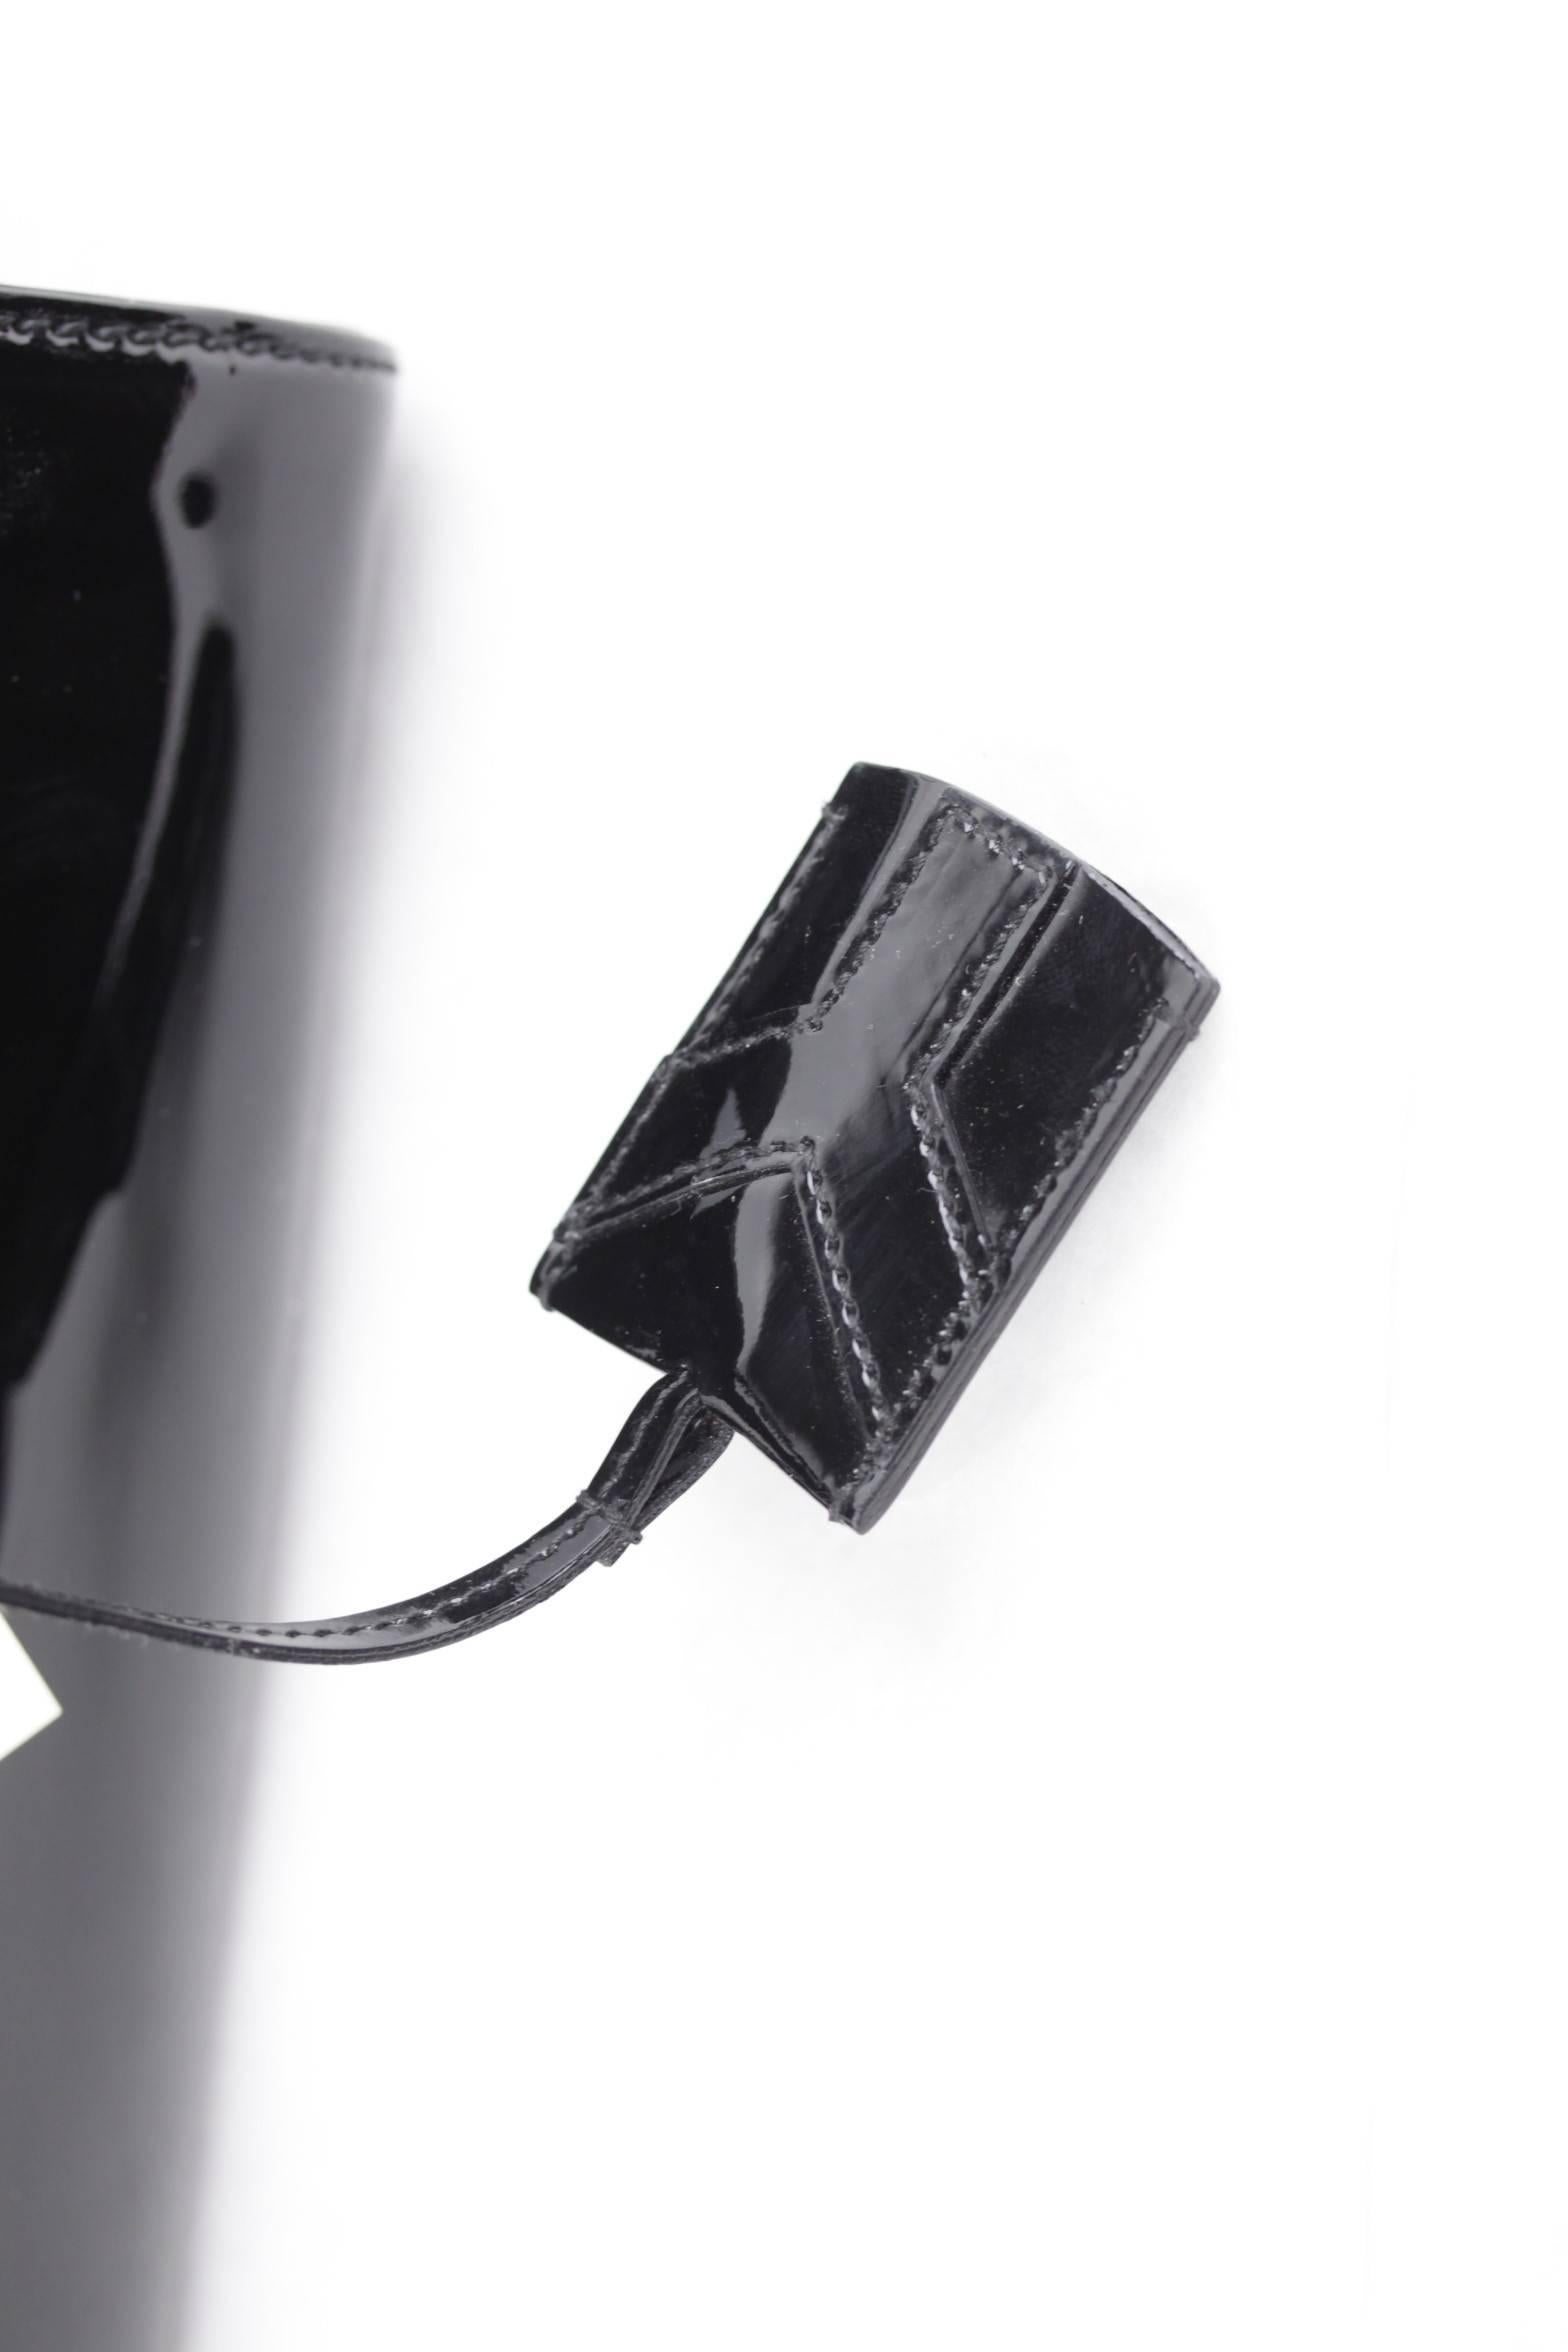 YVES SAINT LAURENT Black Patent Leather UPTOWN Bag HANDBAG Satchel 3